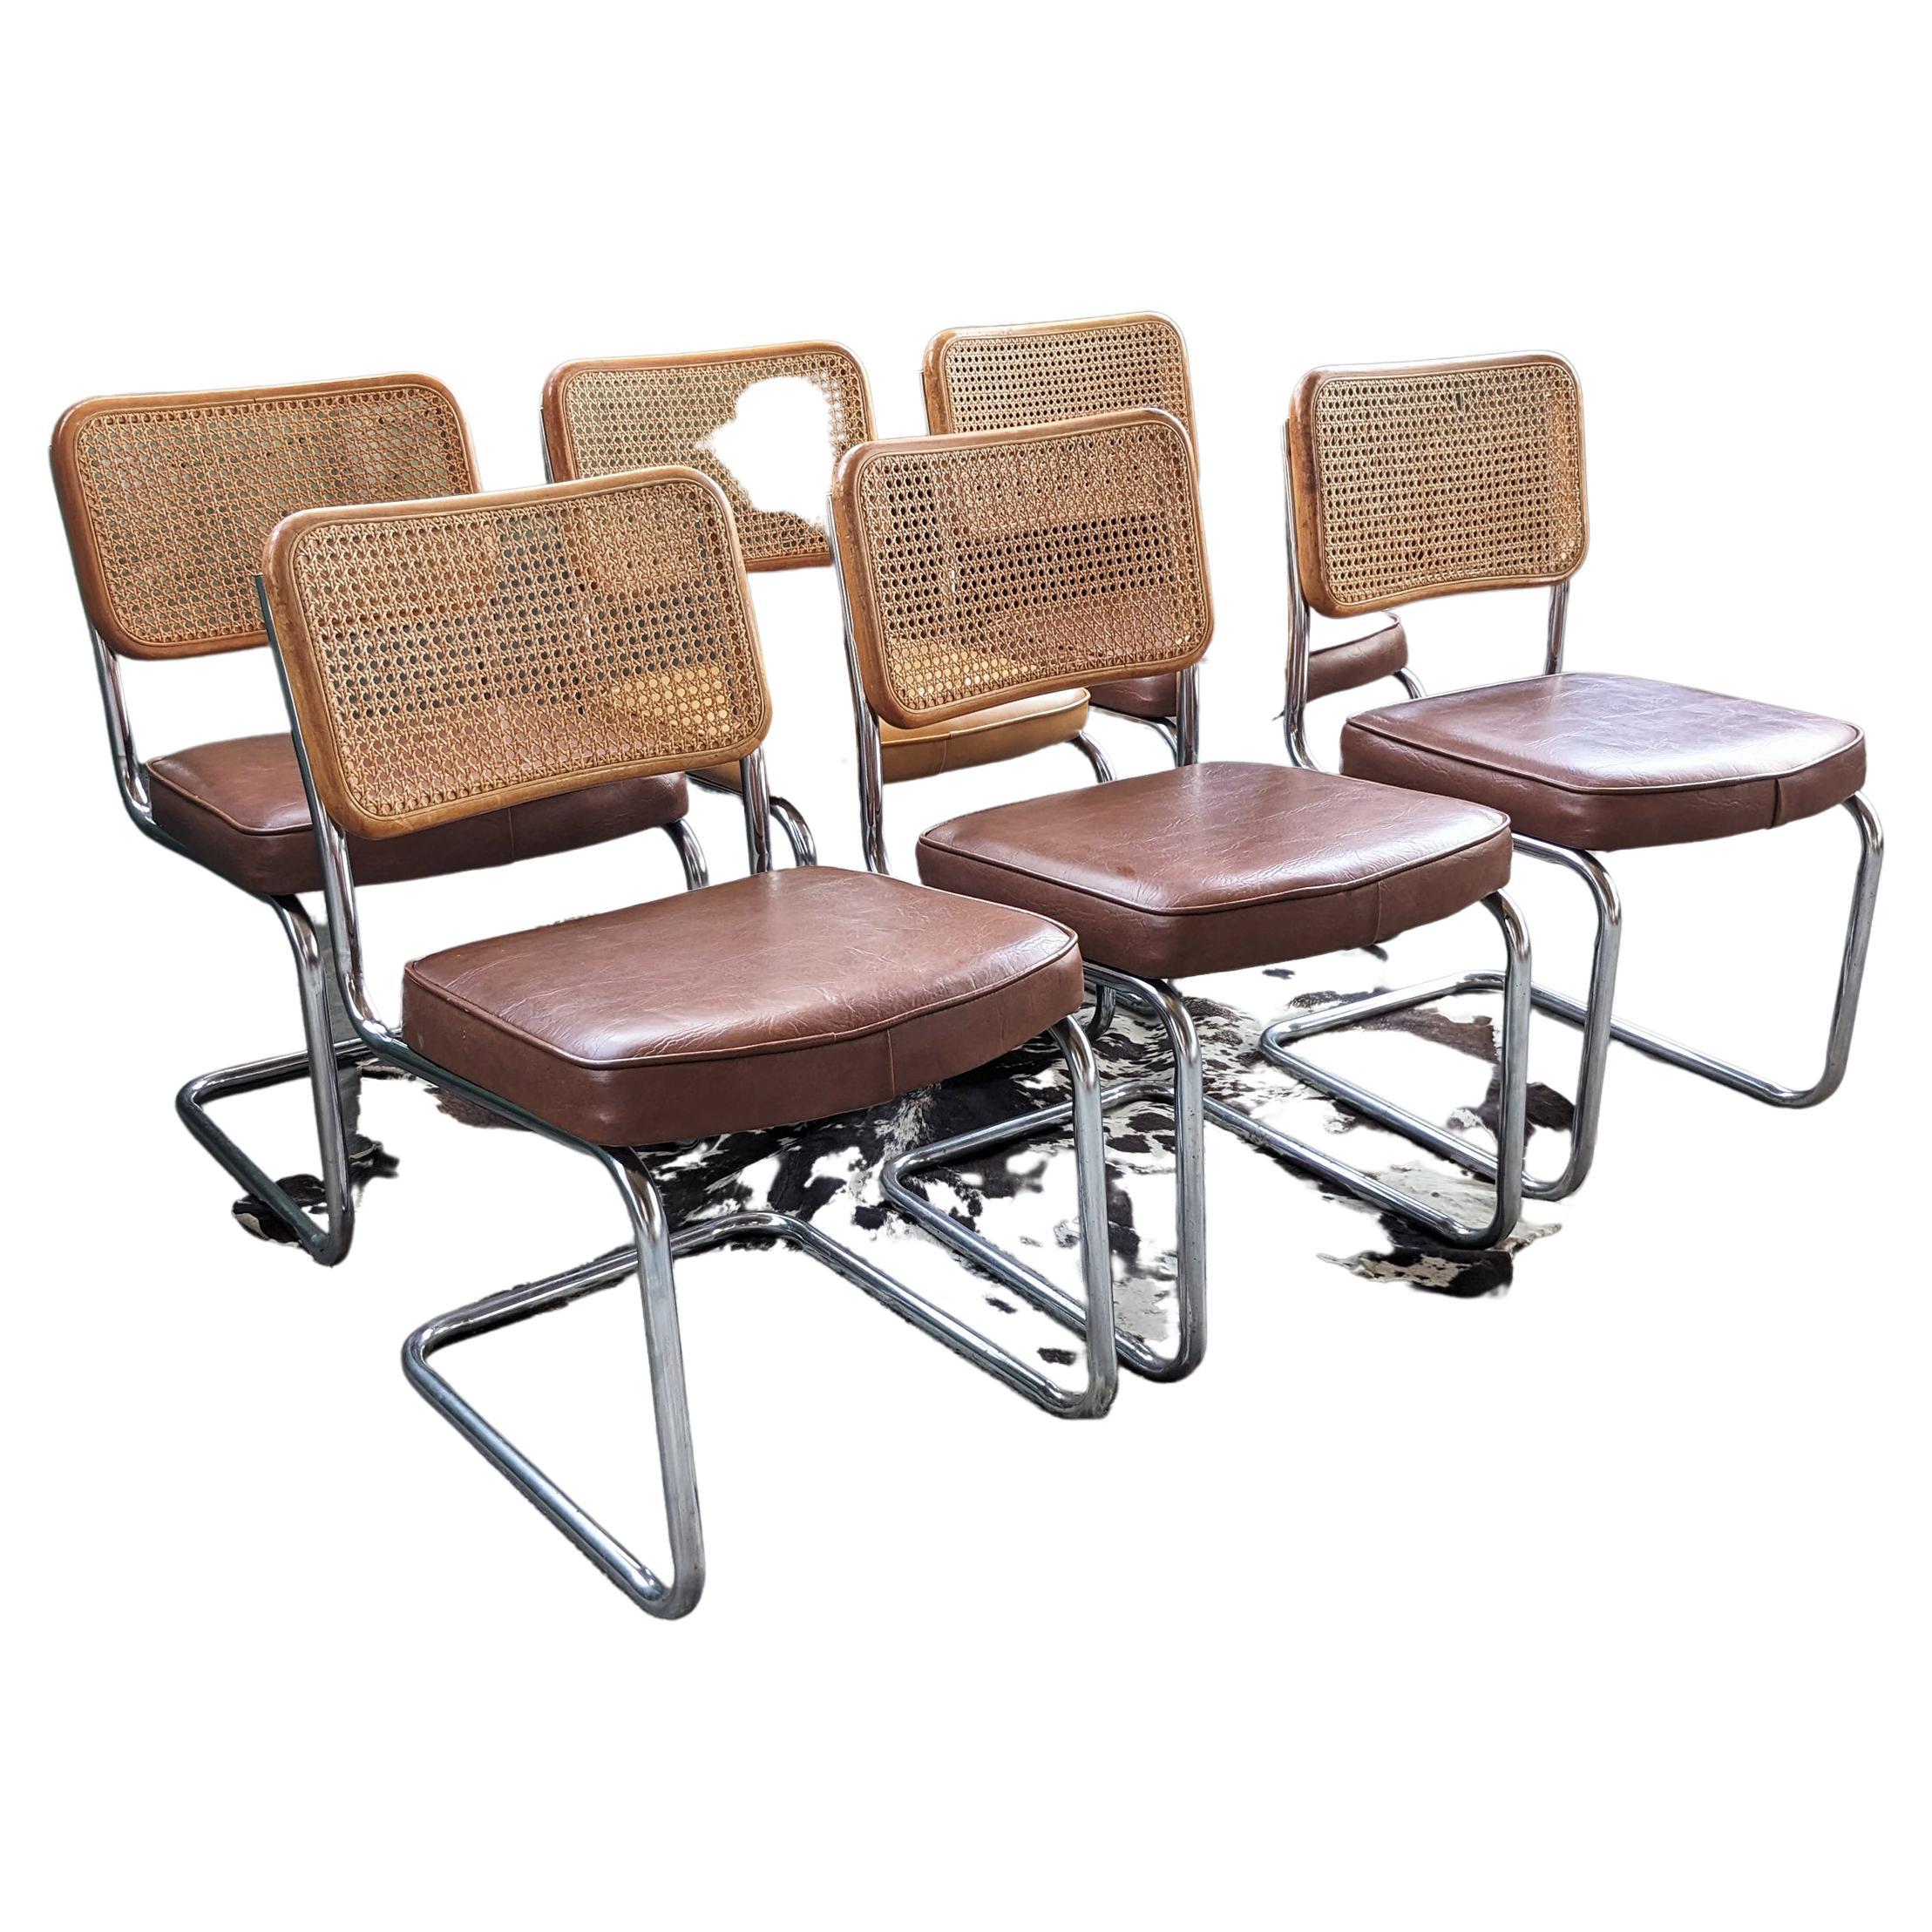 Italian Marcel Breuer Cesca Chairs - Set of 6 For Sale